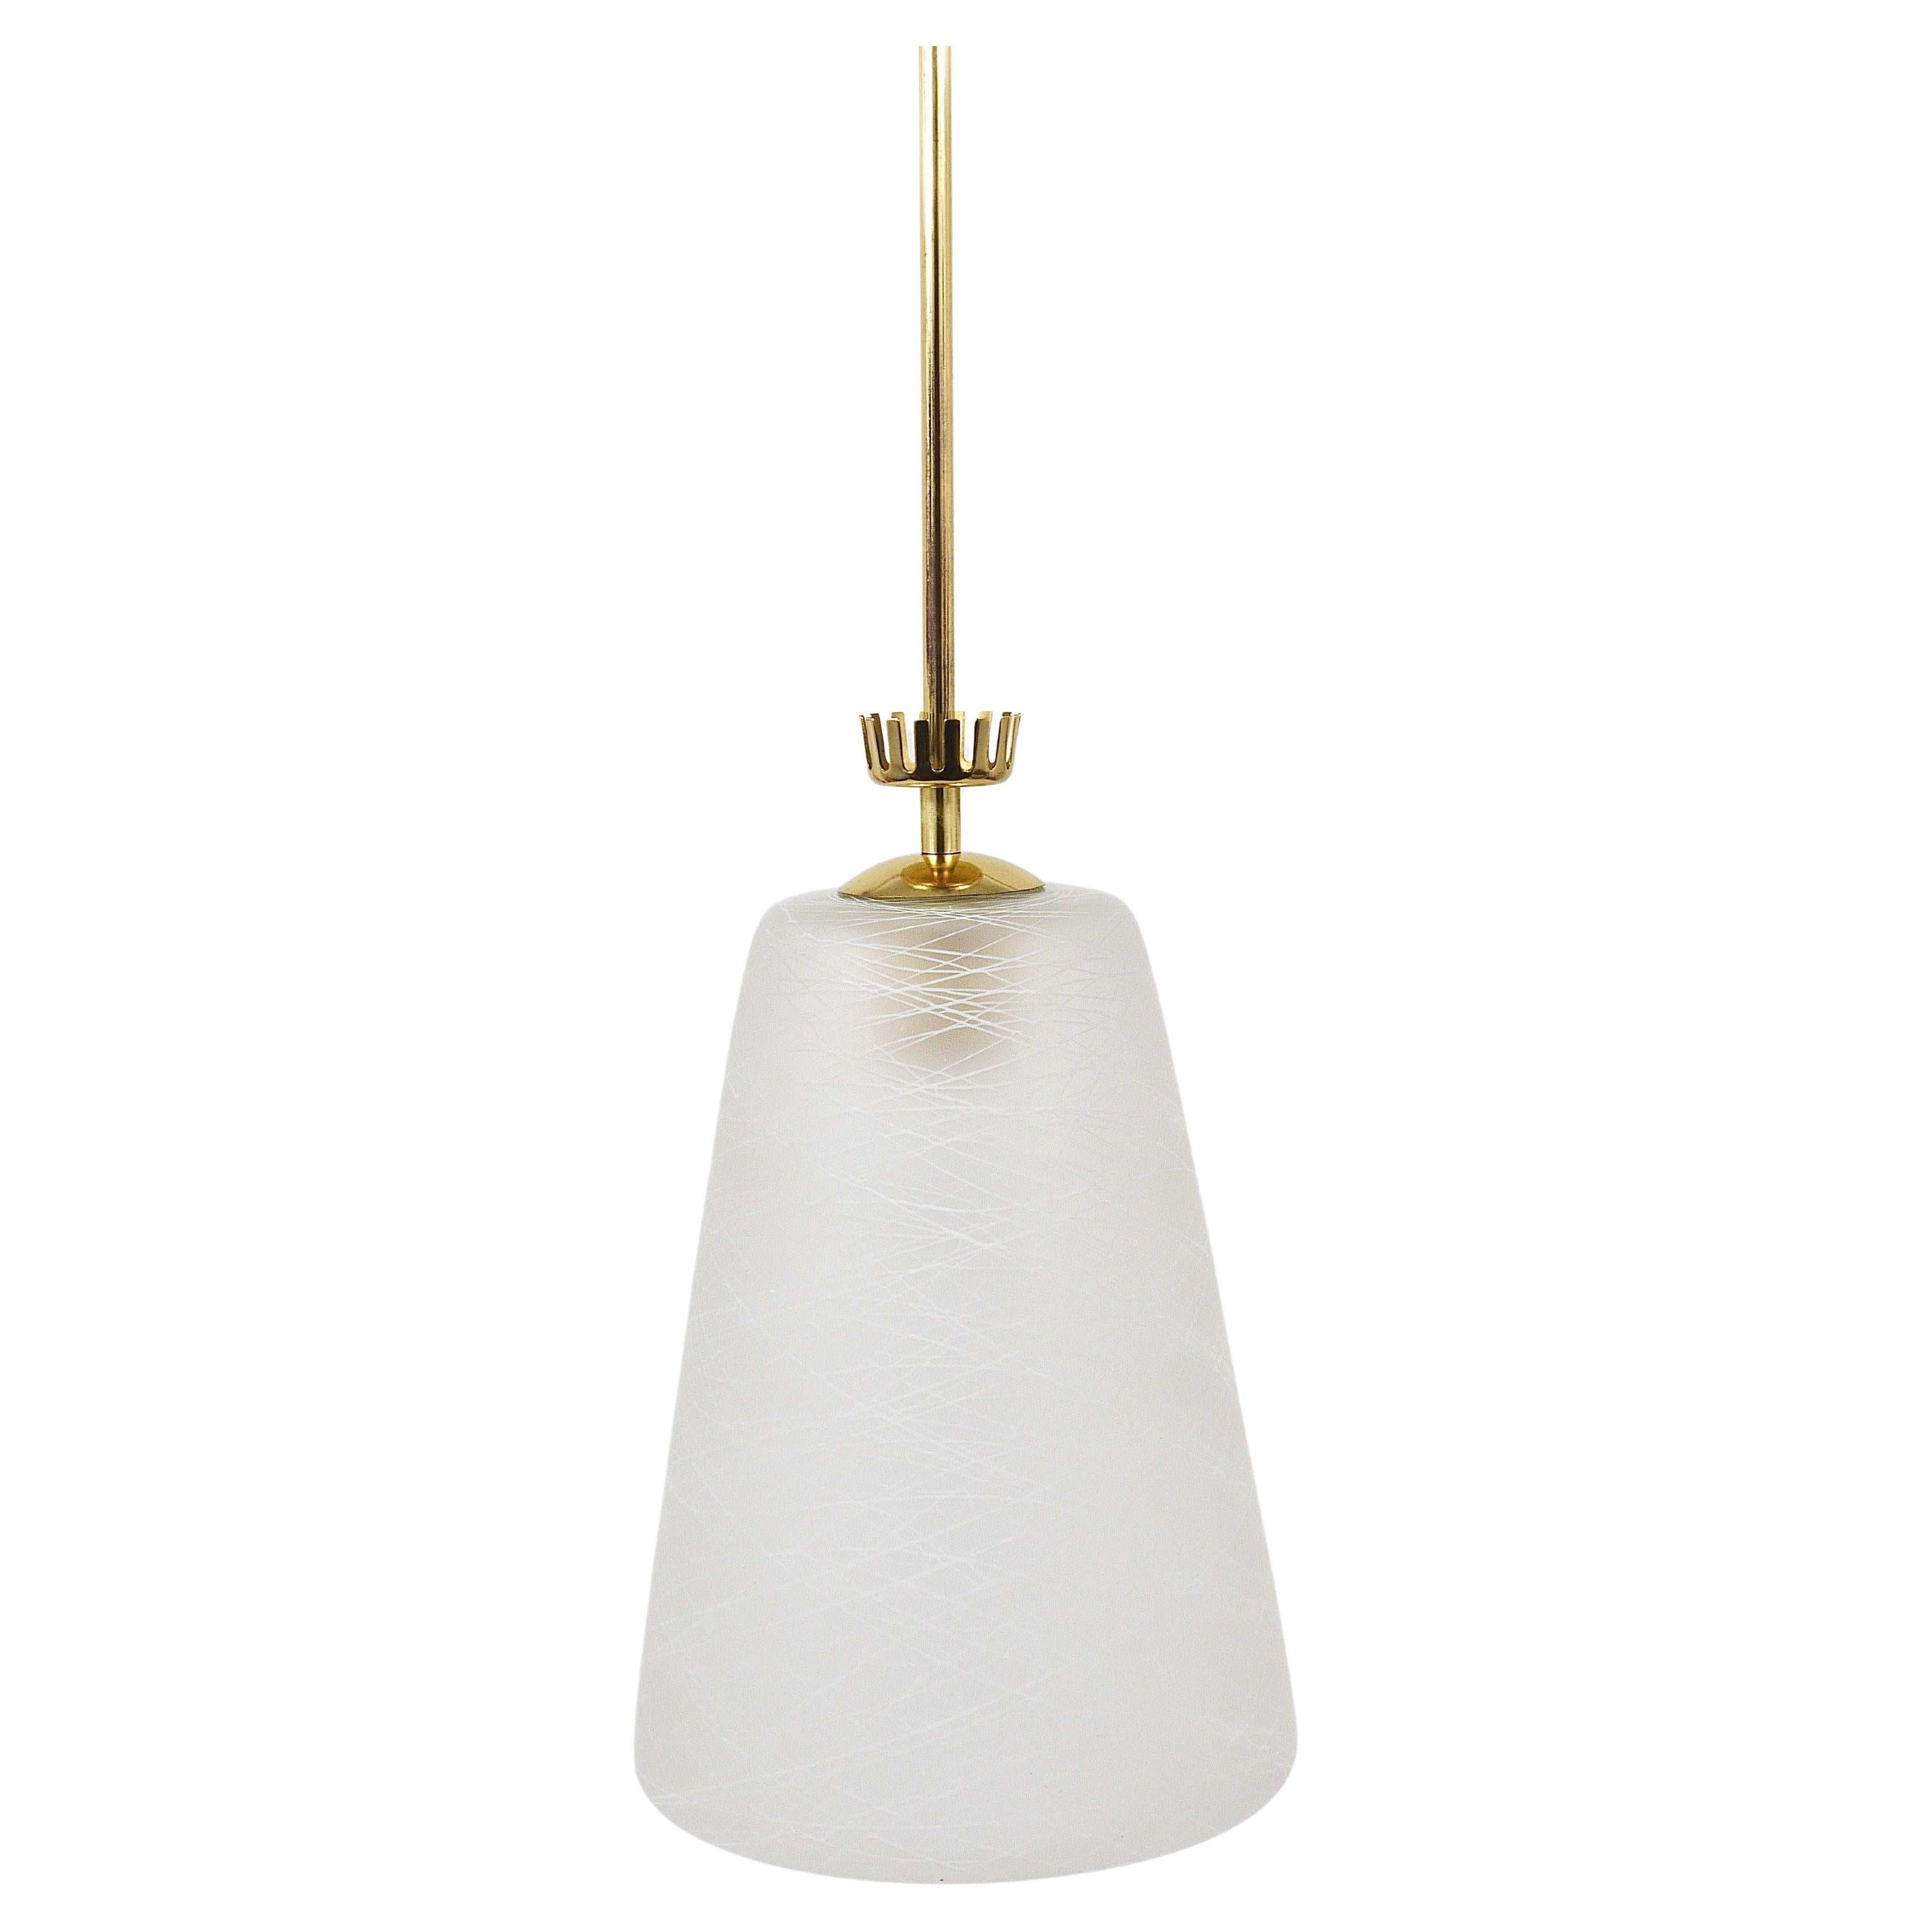 Gio Ponti Style Mid-Century Brass Crown Pendant Lamp Lantern, Italy, 1950s For Sale